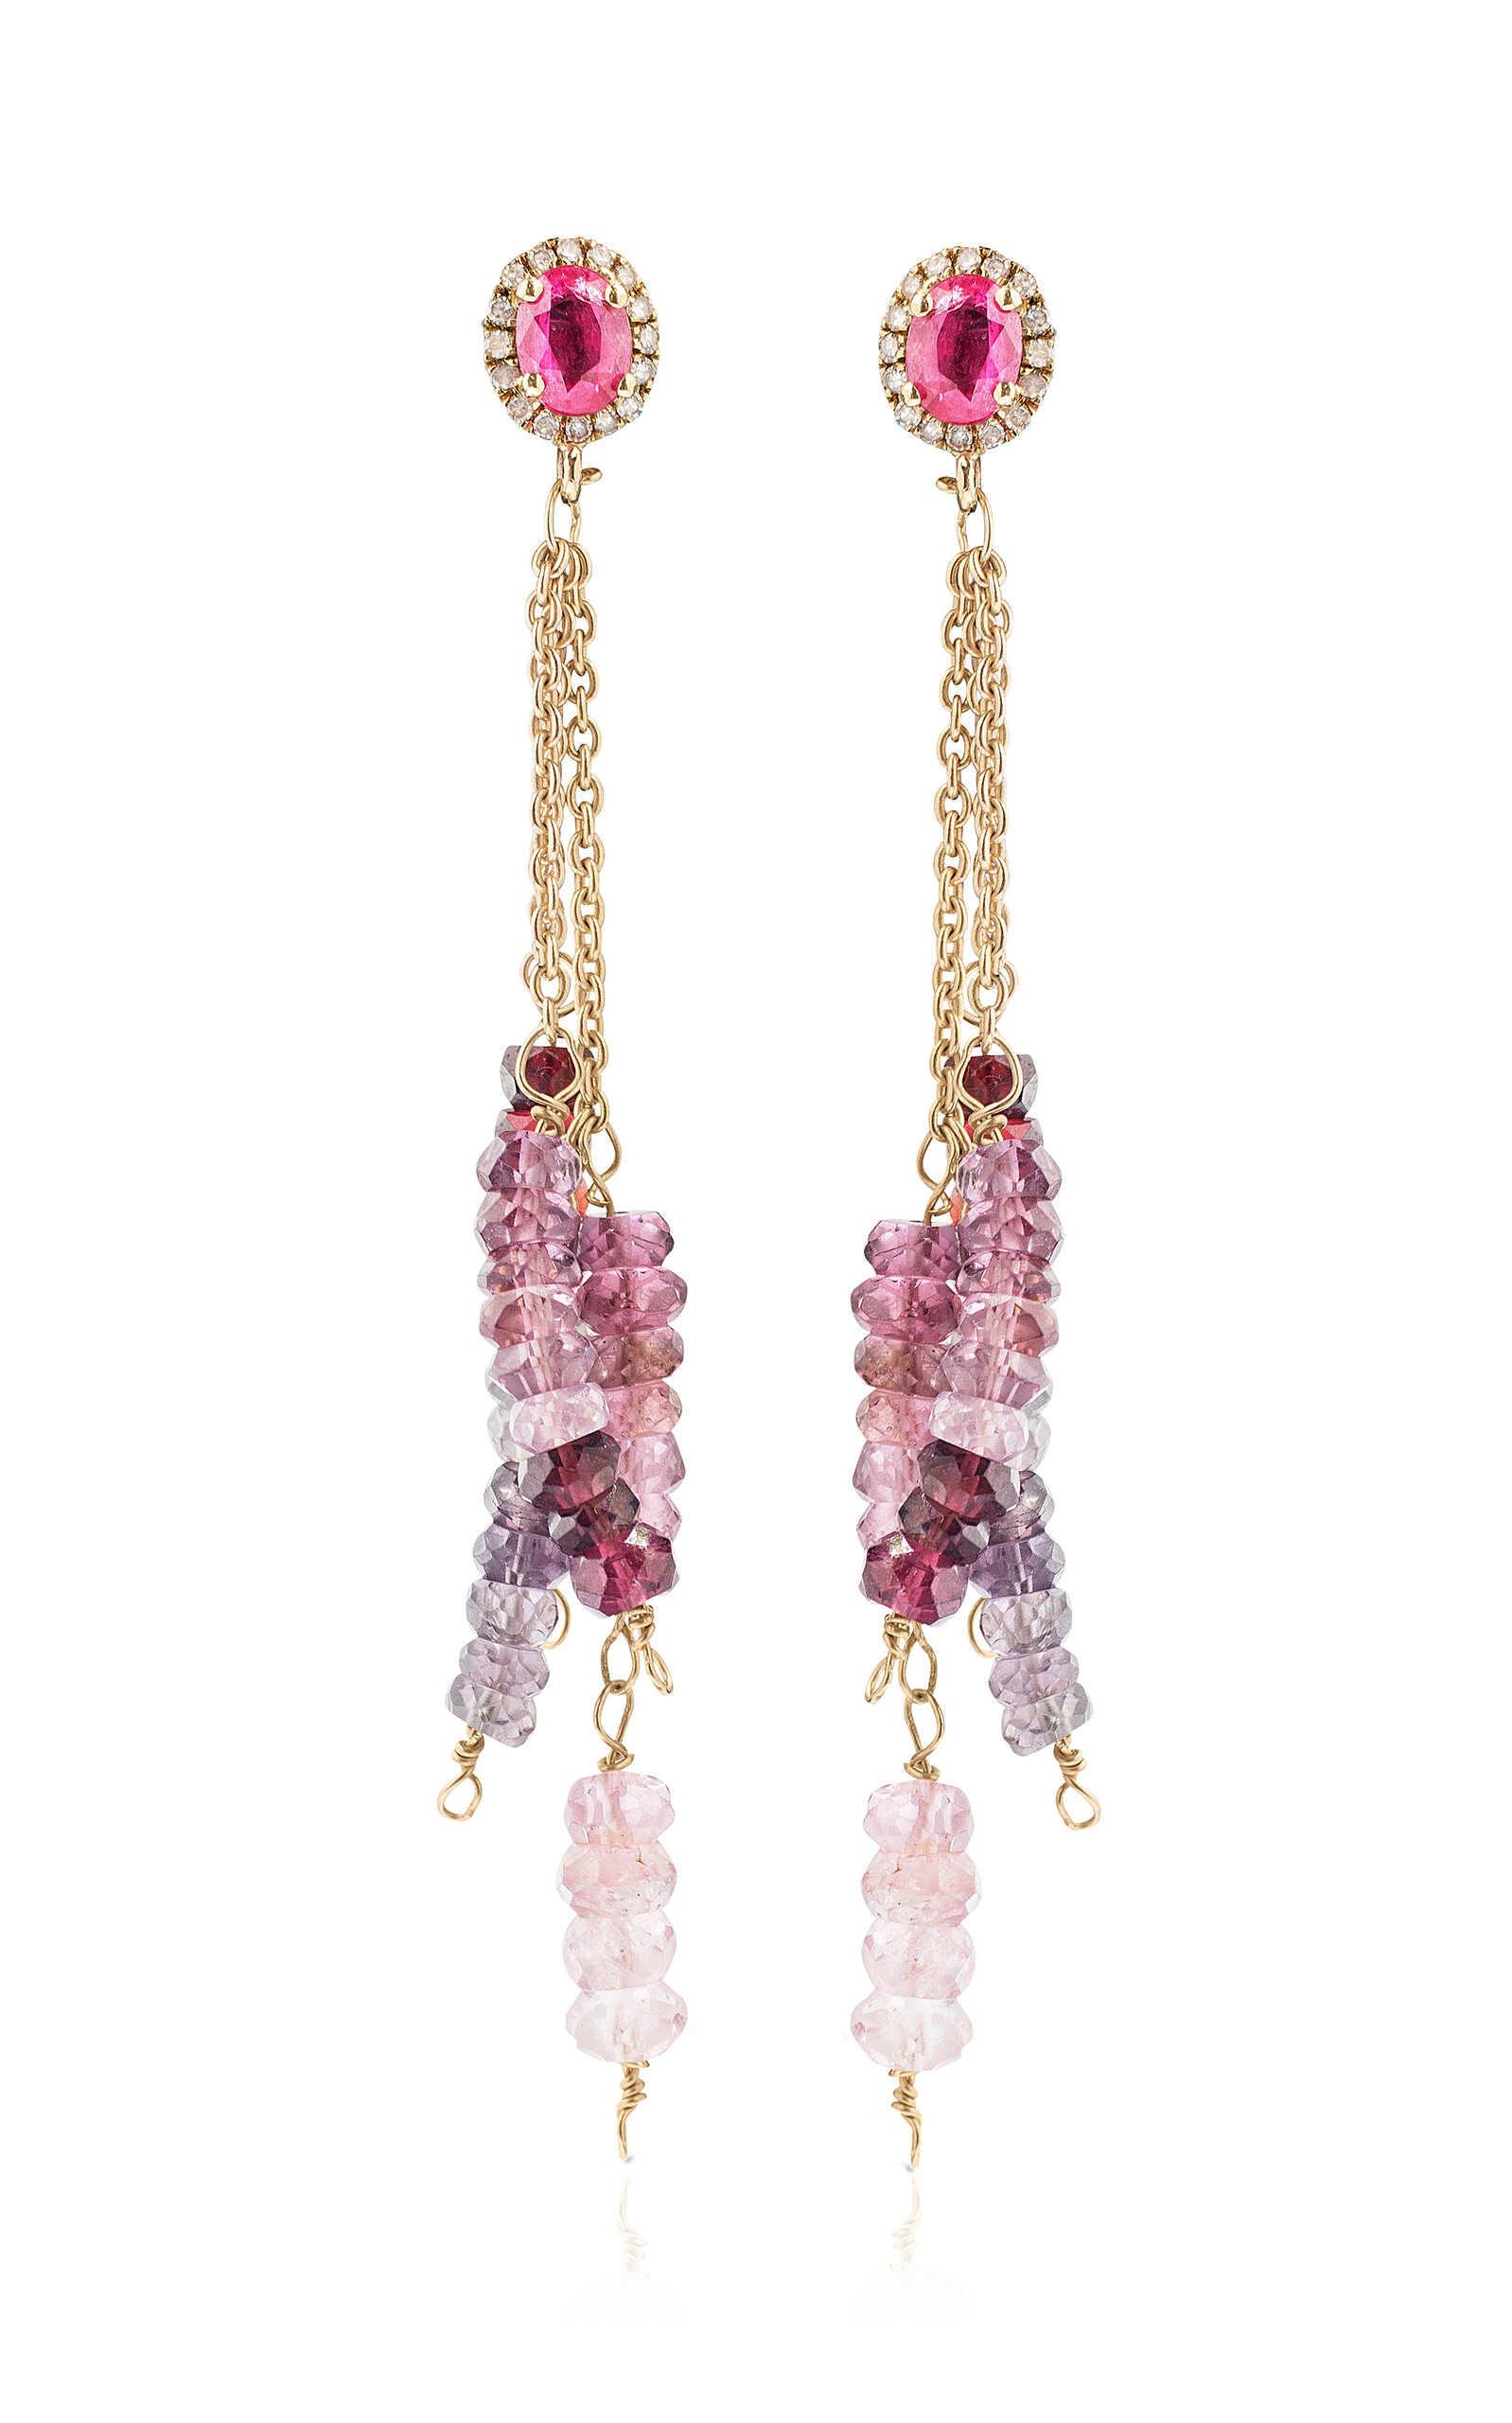 Joie Digiovanni 18k Yellow Gold Sangria Chain Stud Earrings In Purple